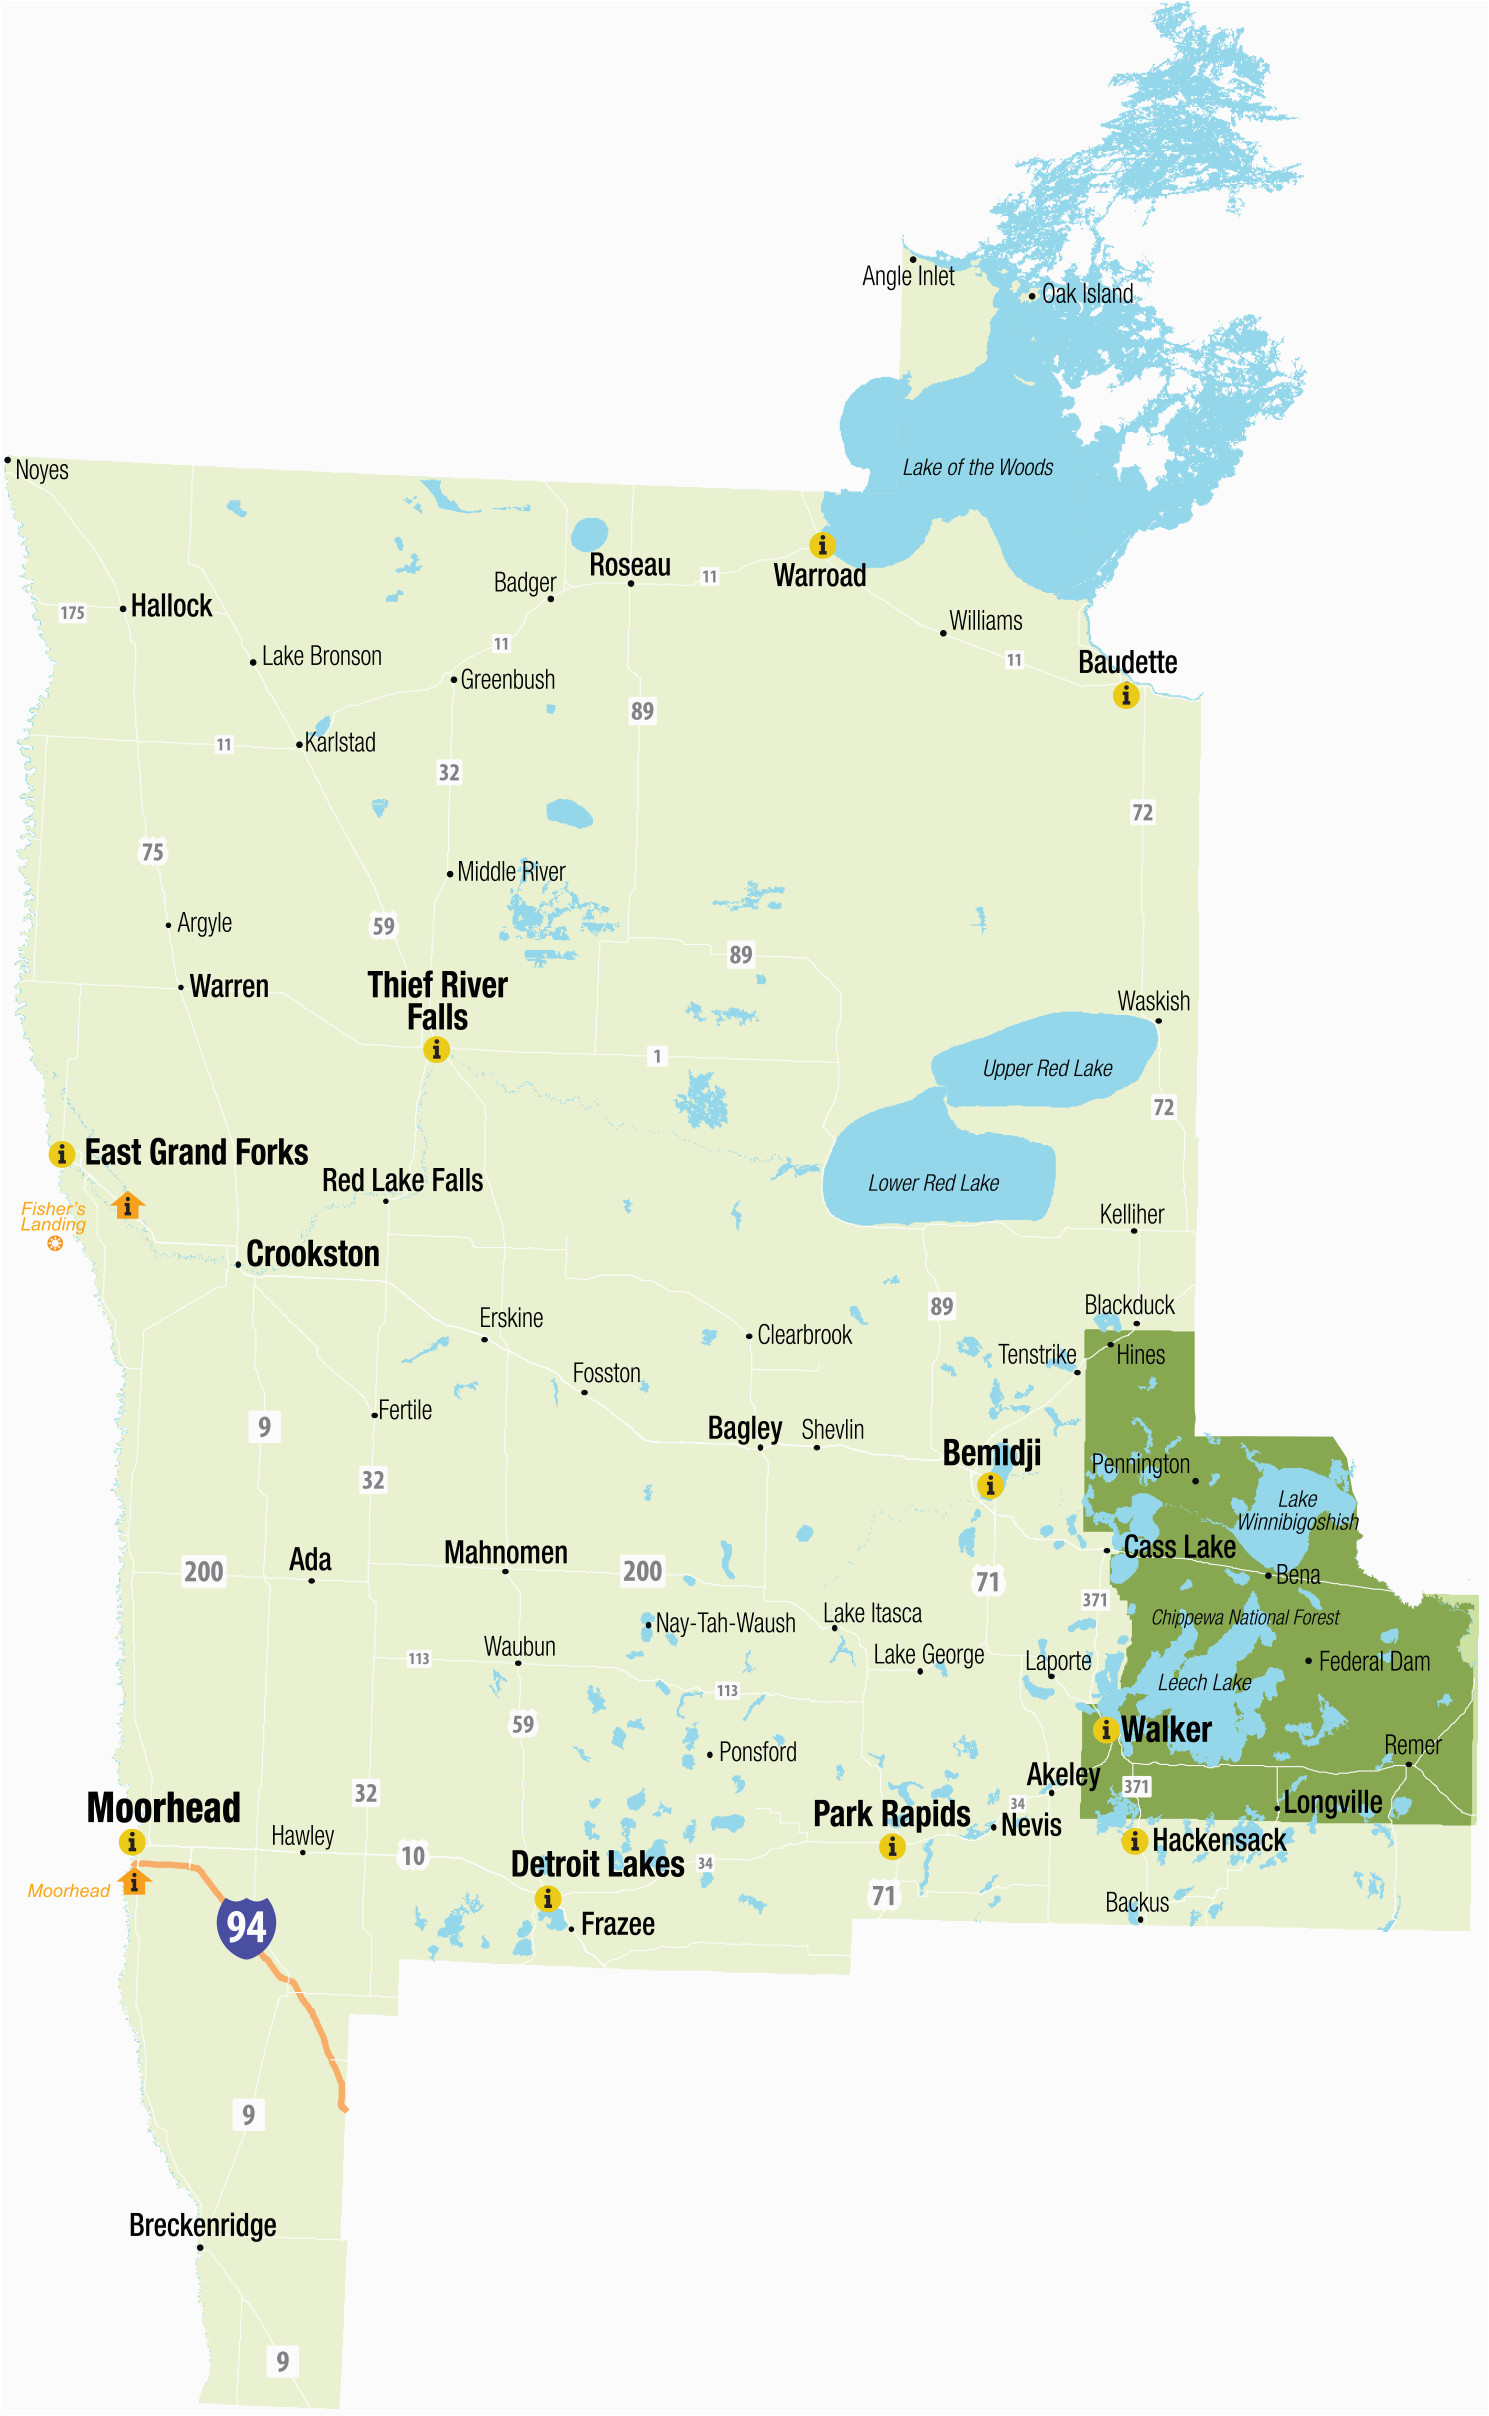 Minnesota Physical Map northwest Minnesota Explore Minnesota